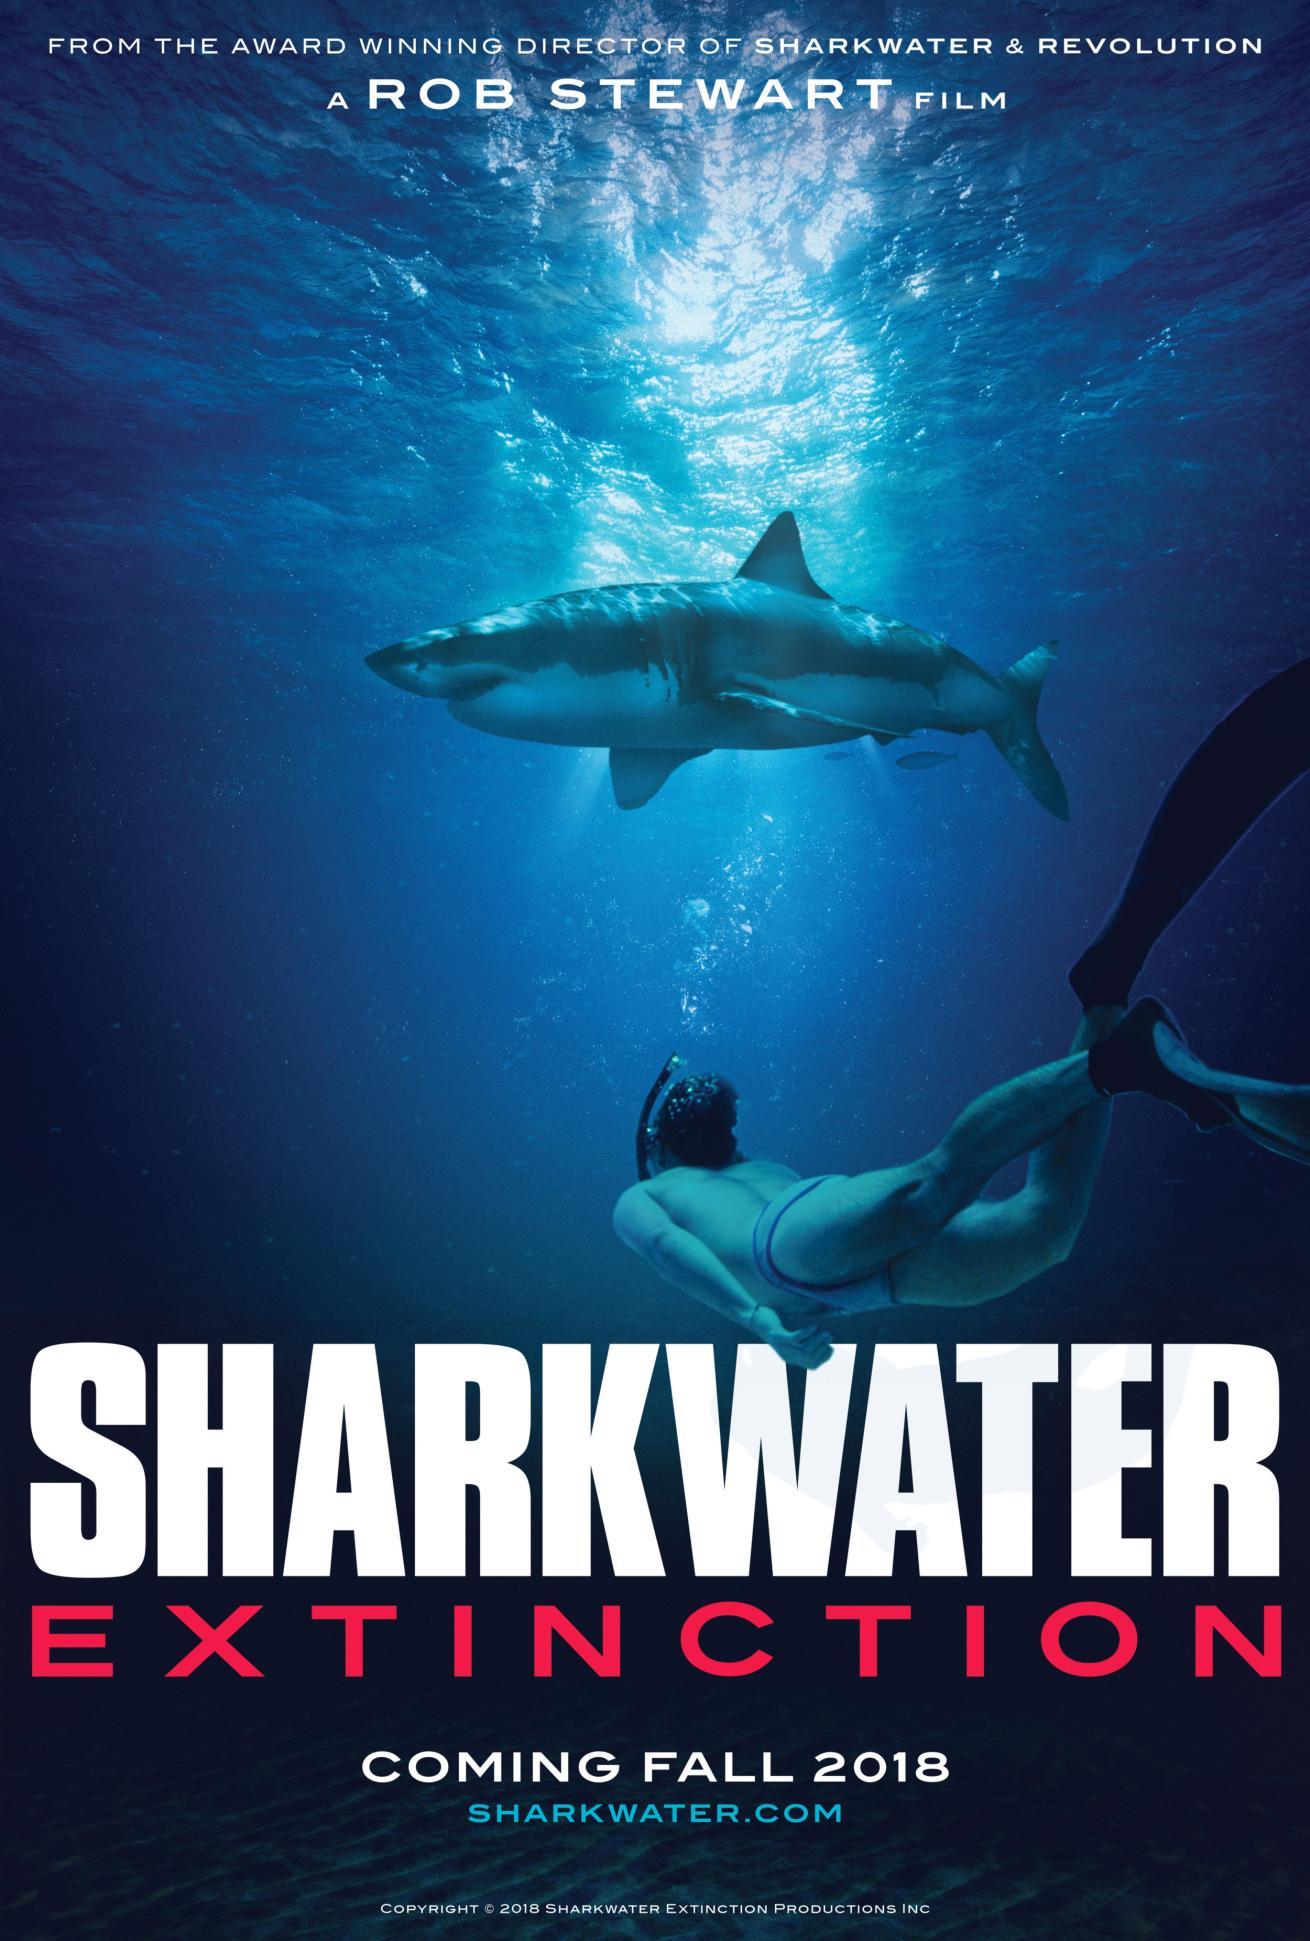 sharkwater extinction